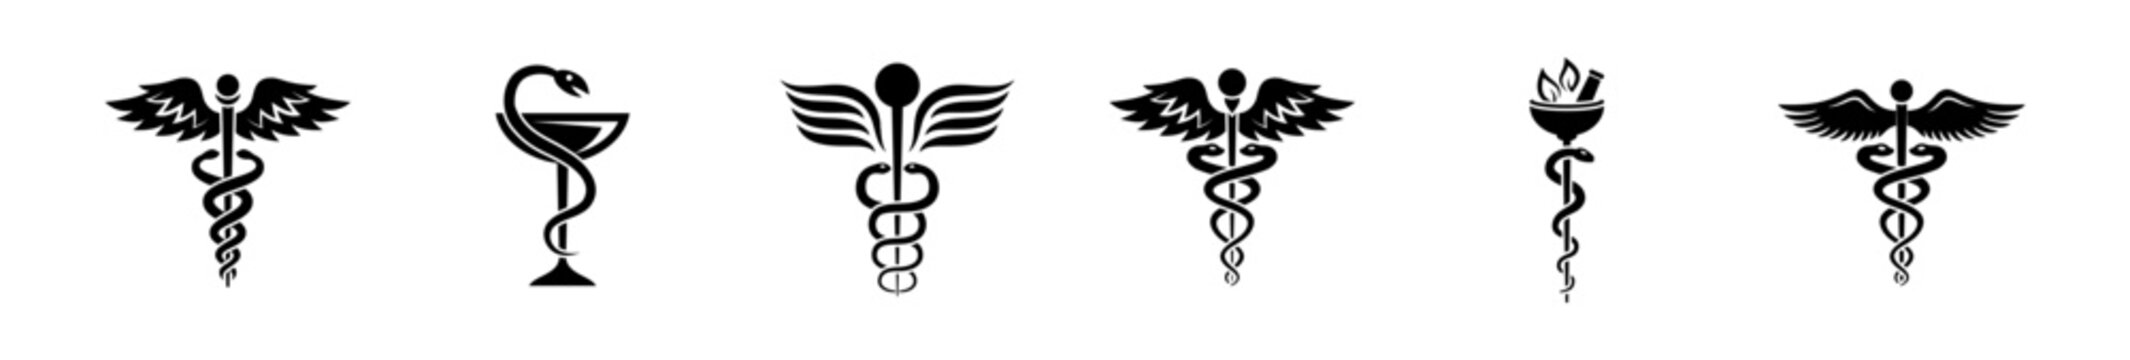 Wall Mural -  - Caduceus snake icons set, vector medical snake logo